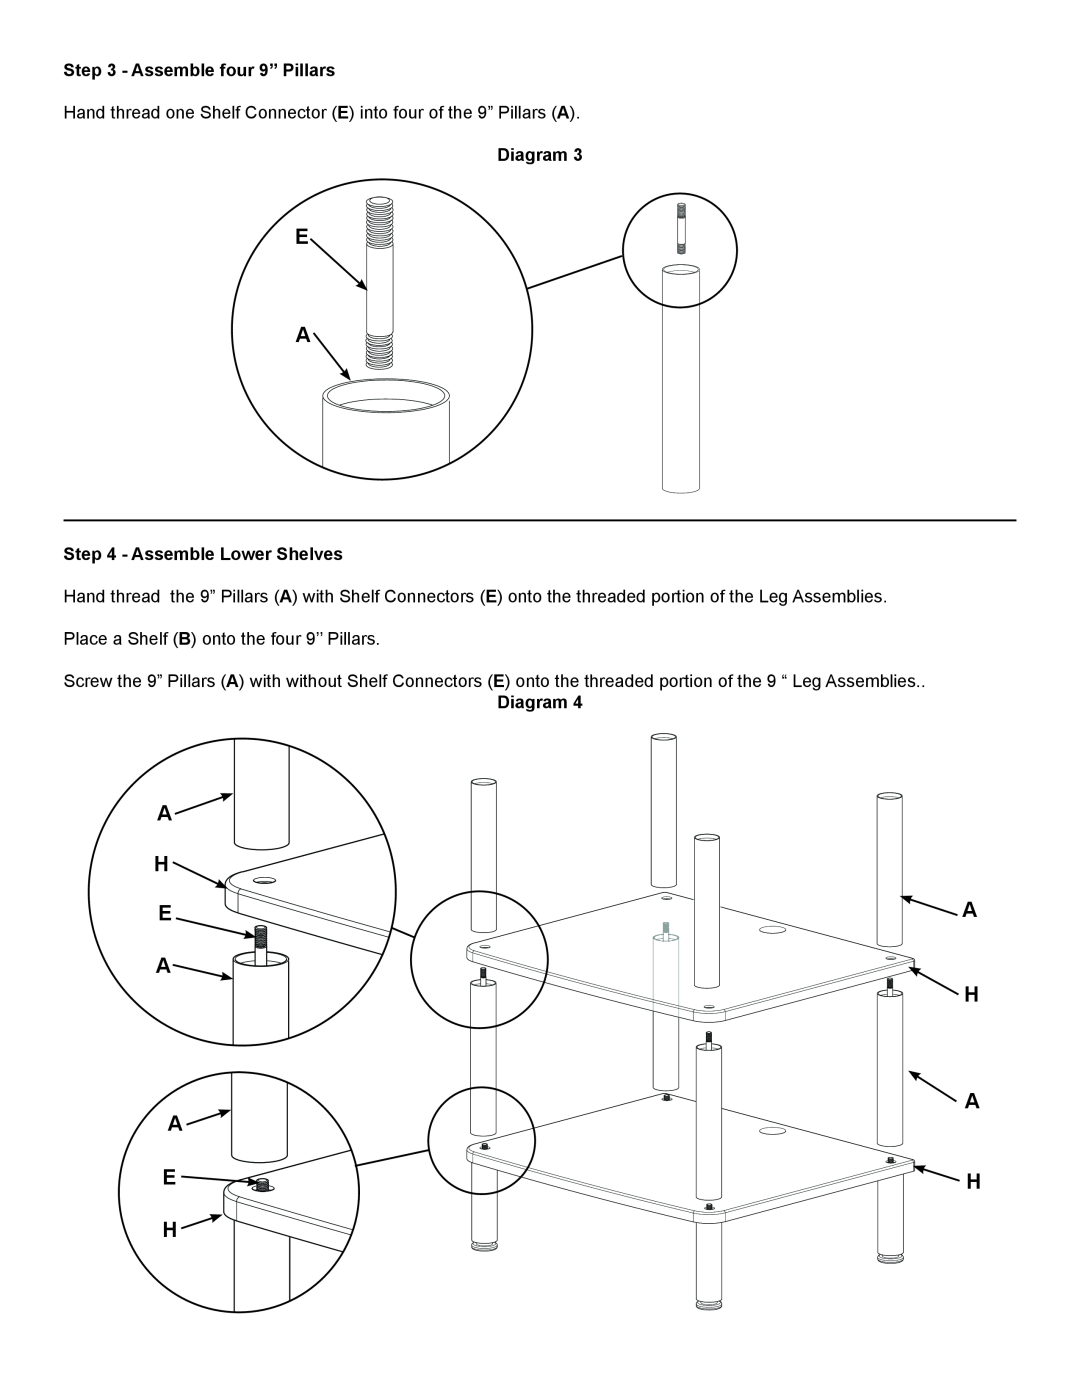 Sanus Systems AFDV manual A H E A A H A A E H H, Assemble four 9” Pillars, Assemble Lower Shelves, Diagram 